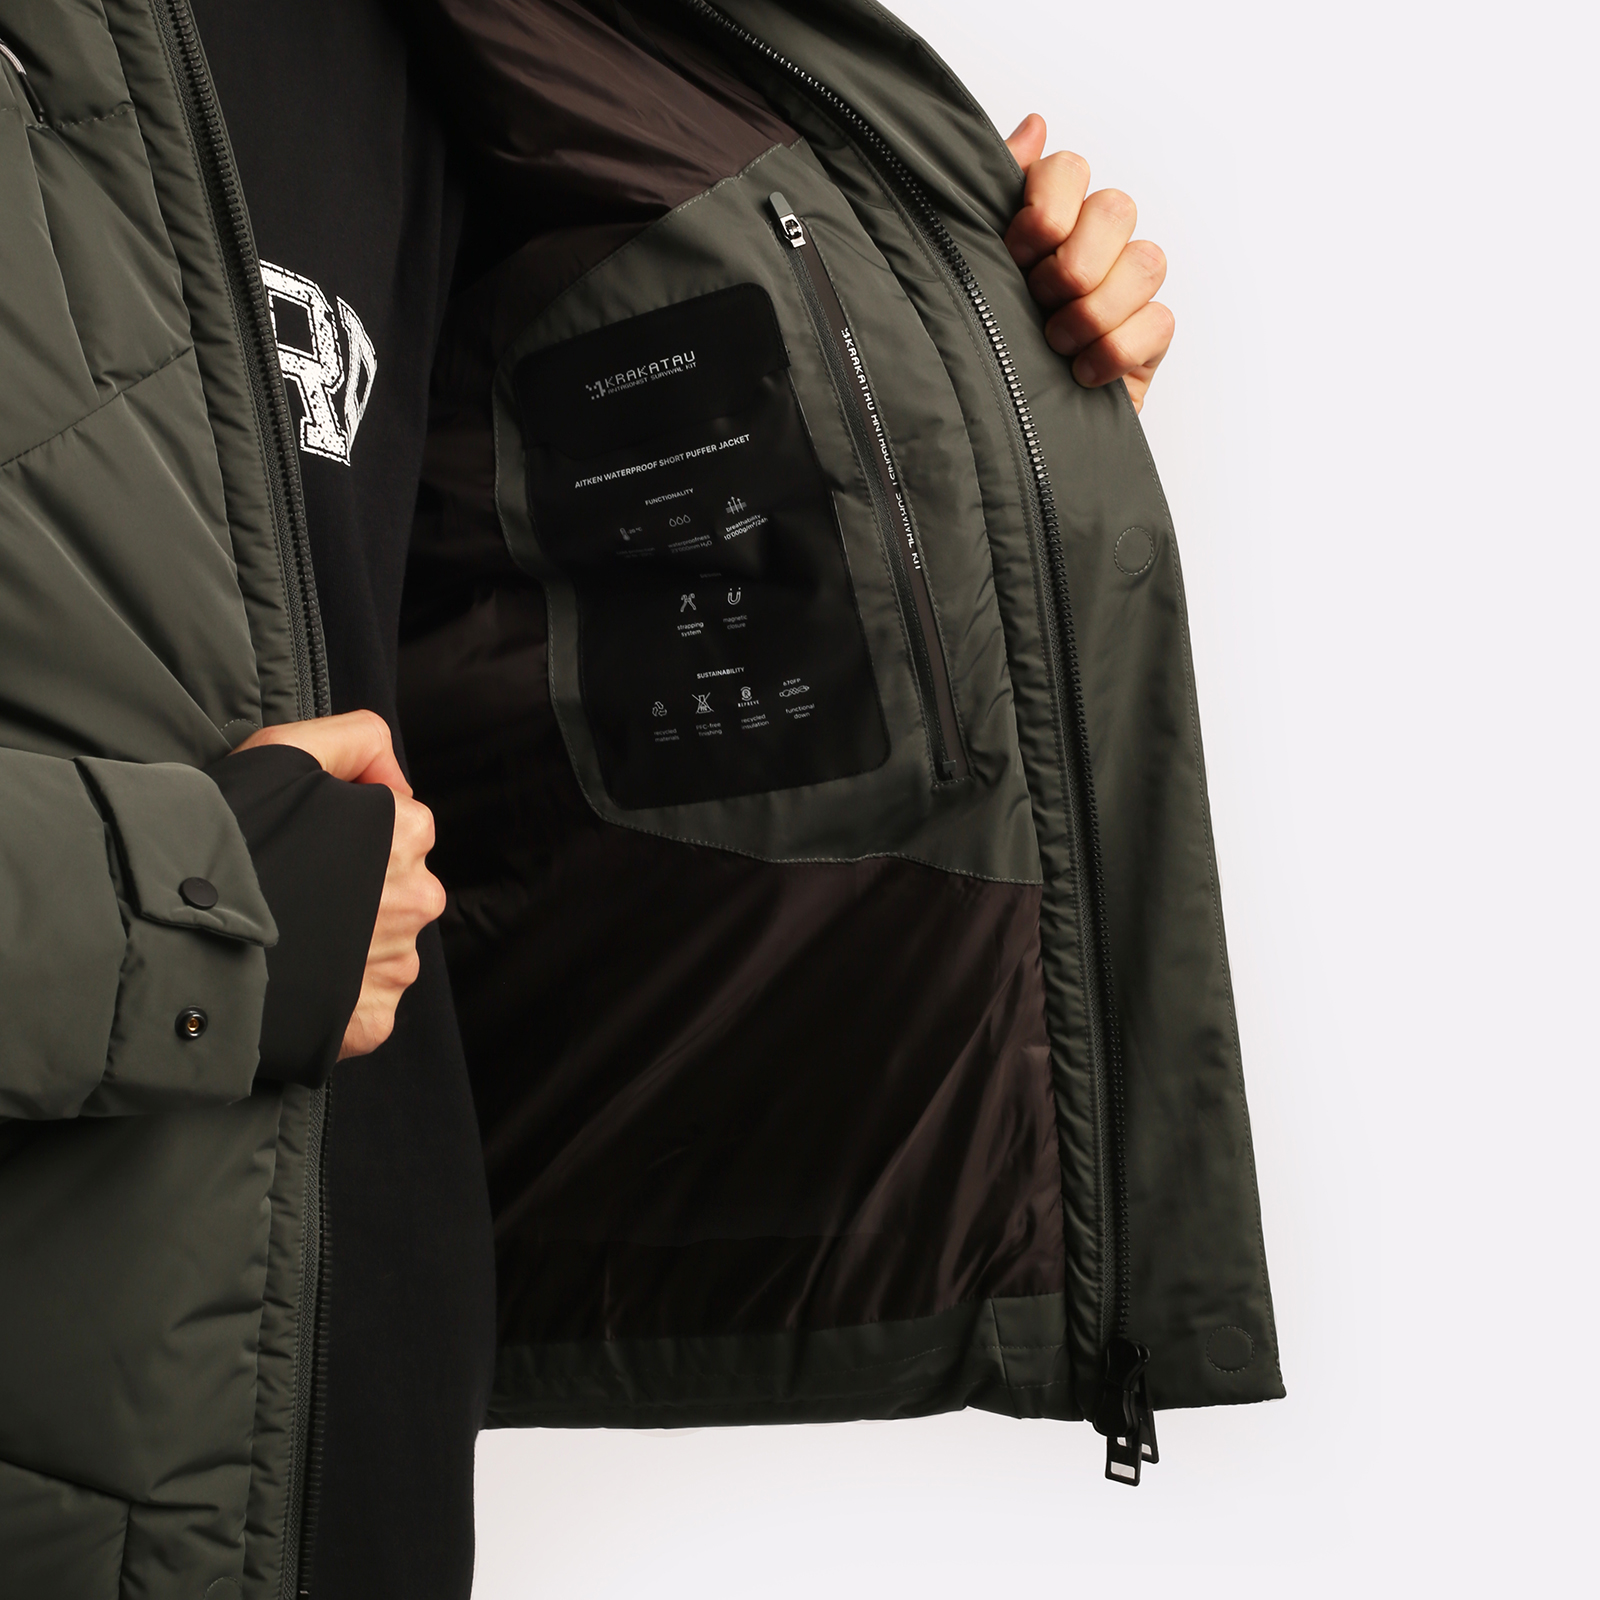 мужская куртка KRAKATAU Aitken   (Qm440-52 ел-серый)  - цена, описание, фото 7